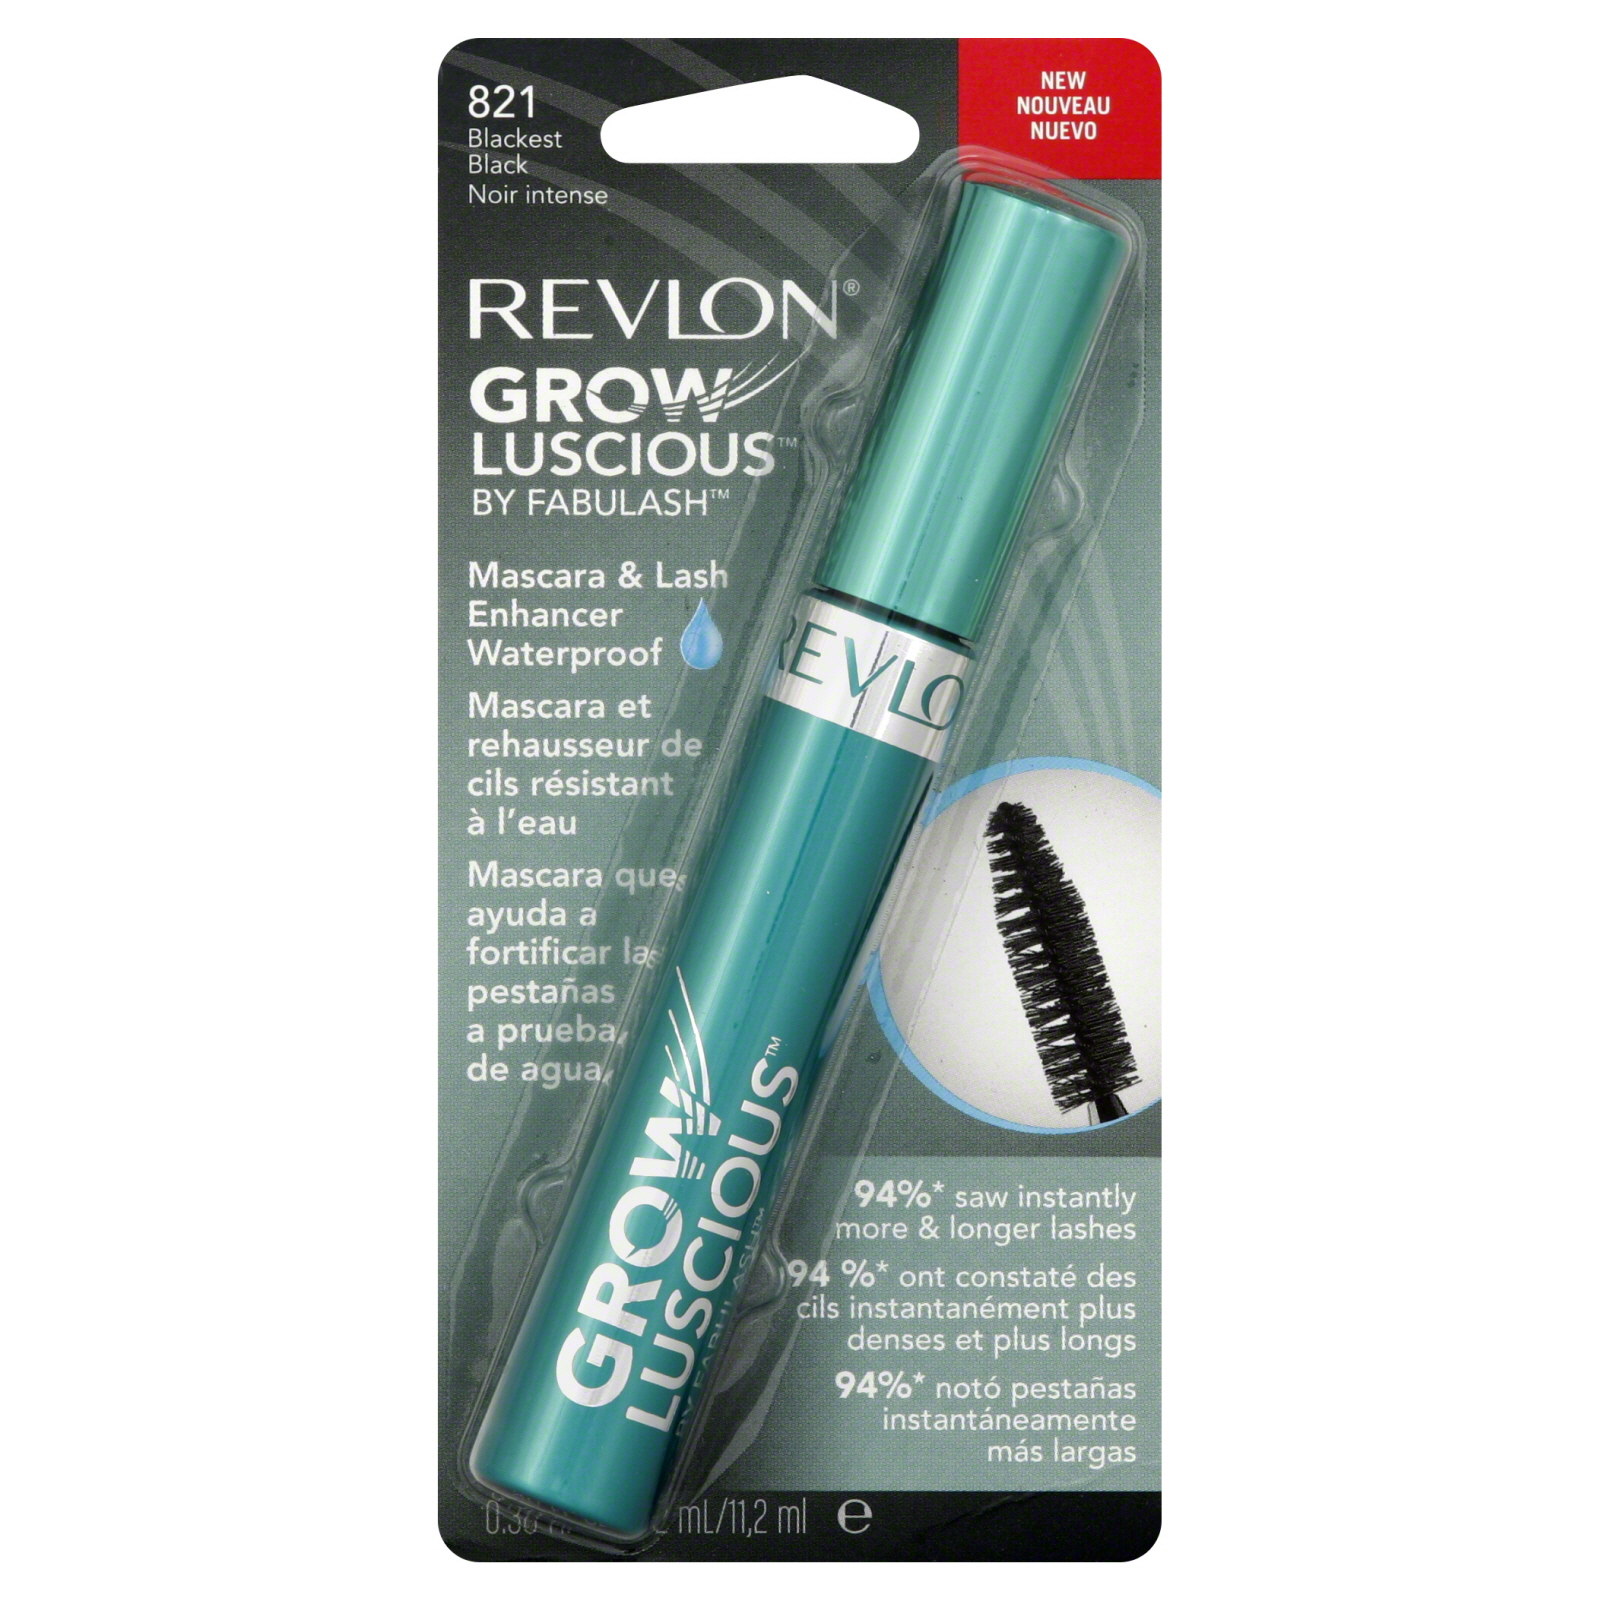 Revlon Grow Luscious Mascara & Lash Enhancer, Waterproof, Blackest Black 821, 0.38 fl oz (11.2 ml)